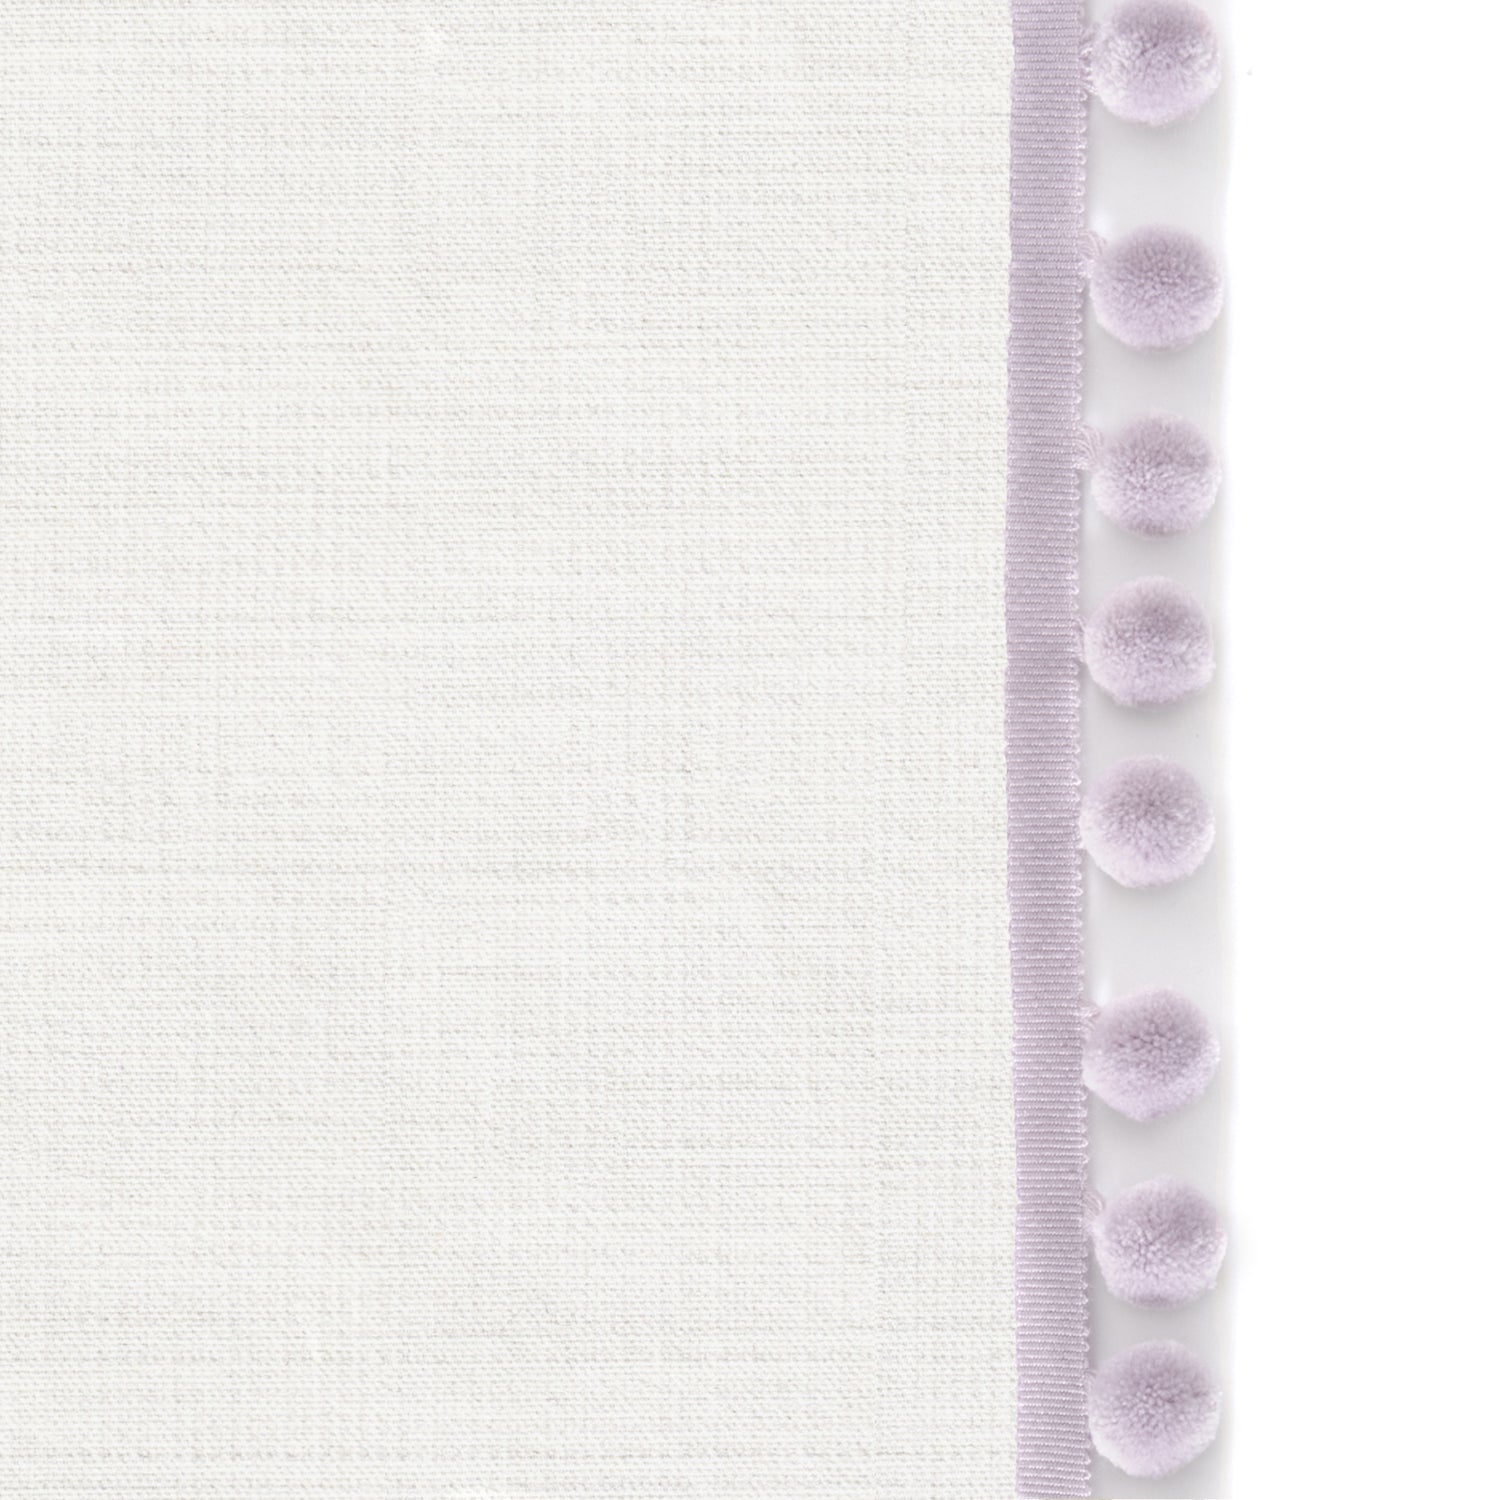 Upclose picture of Snow custom Whiteshower curtain with lilac pom pom trim